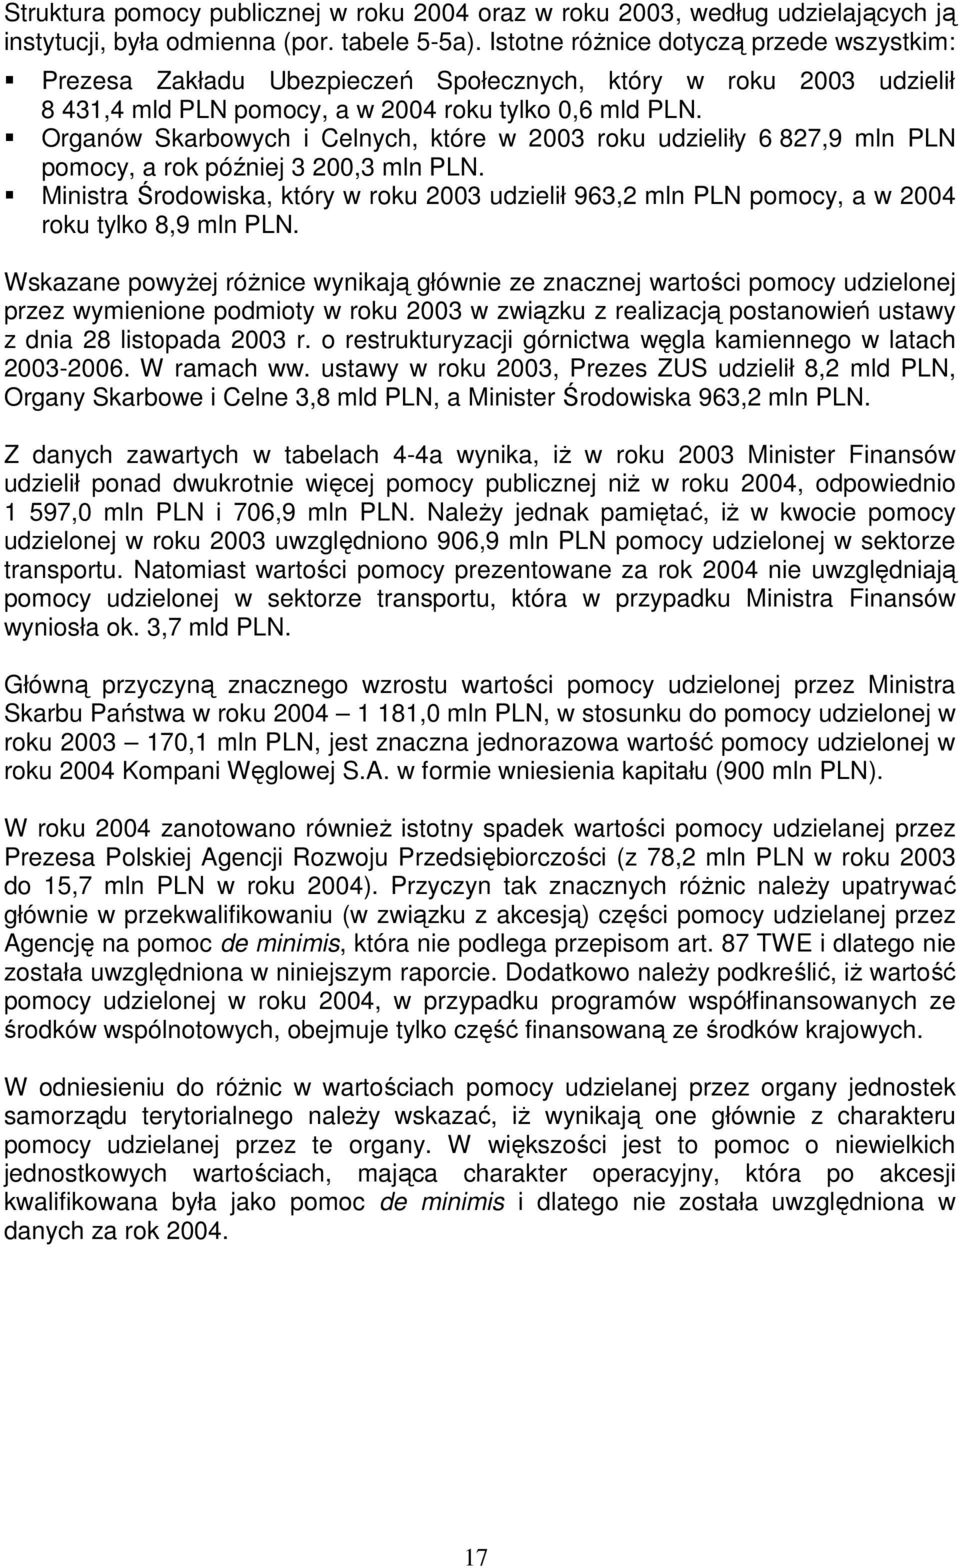 Organów Skarbowych i Celnych, które w 2003 roku udzieliły 6 827,9 mln PLN, a rok później 3 200,3 mln PLN.